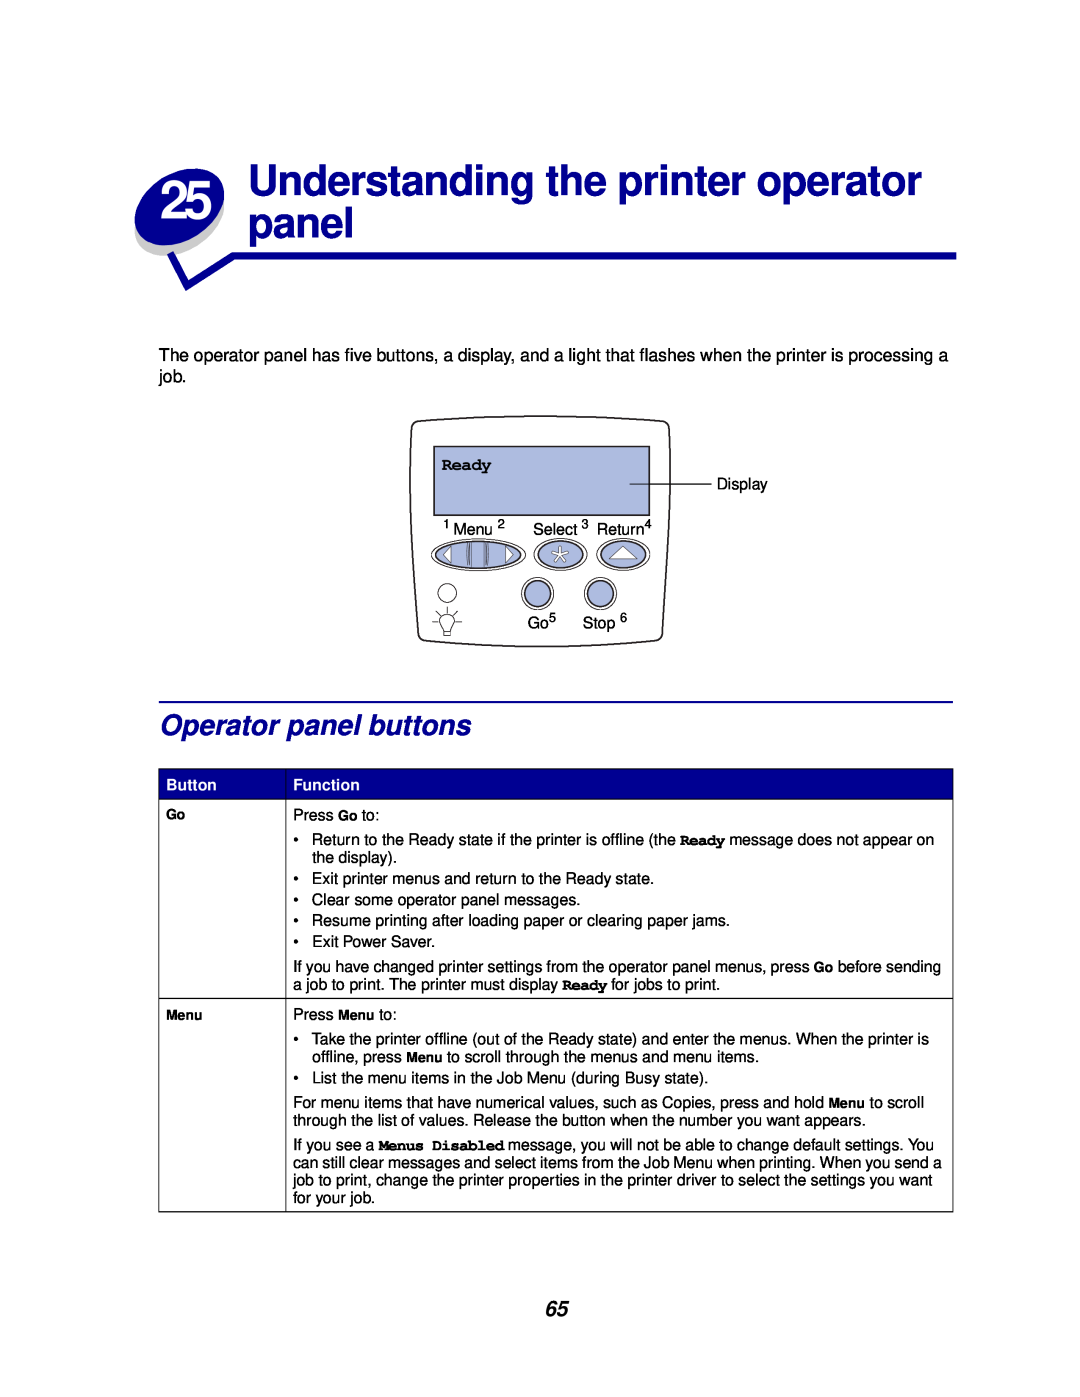 Lexmark 812 manual Understandingpanelthe printer operator, Operator panel buttons, Ready, Button, Function 